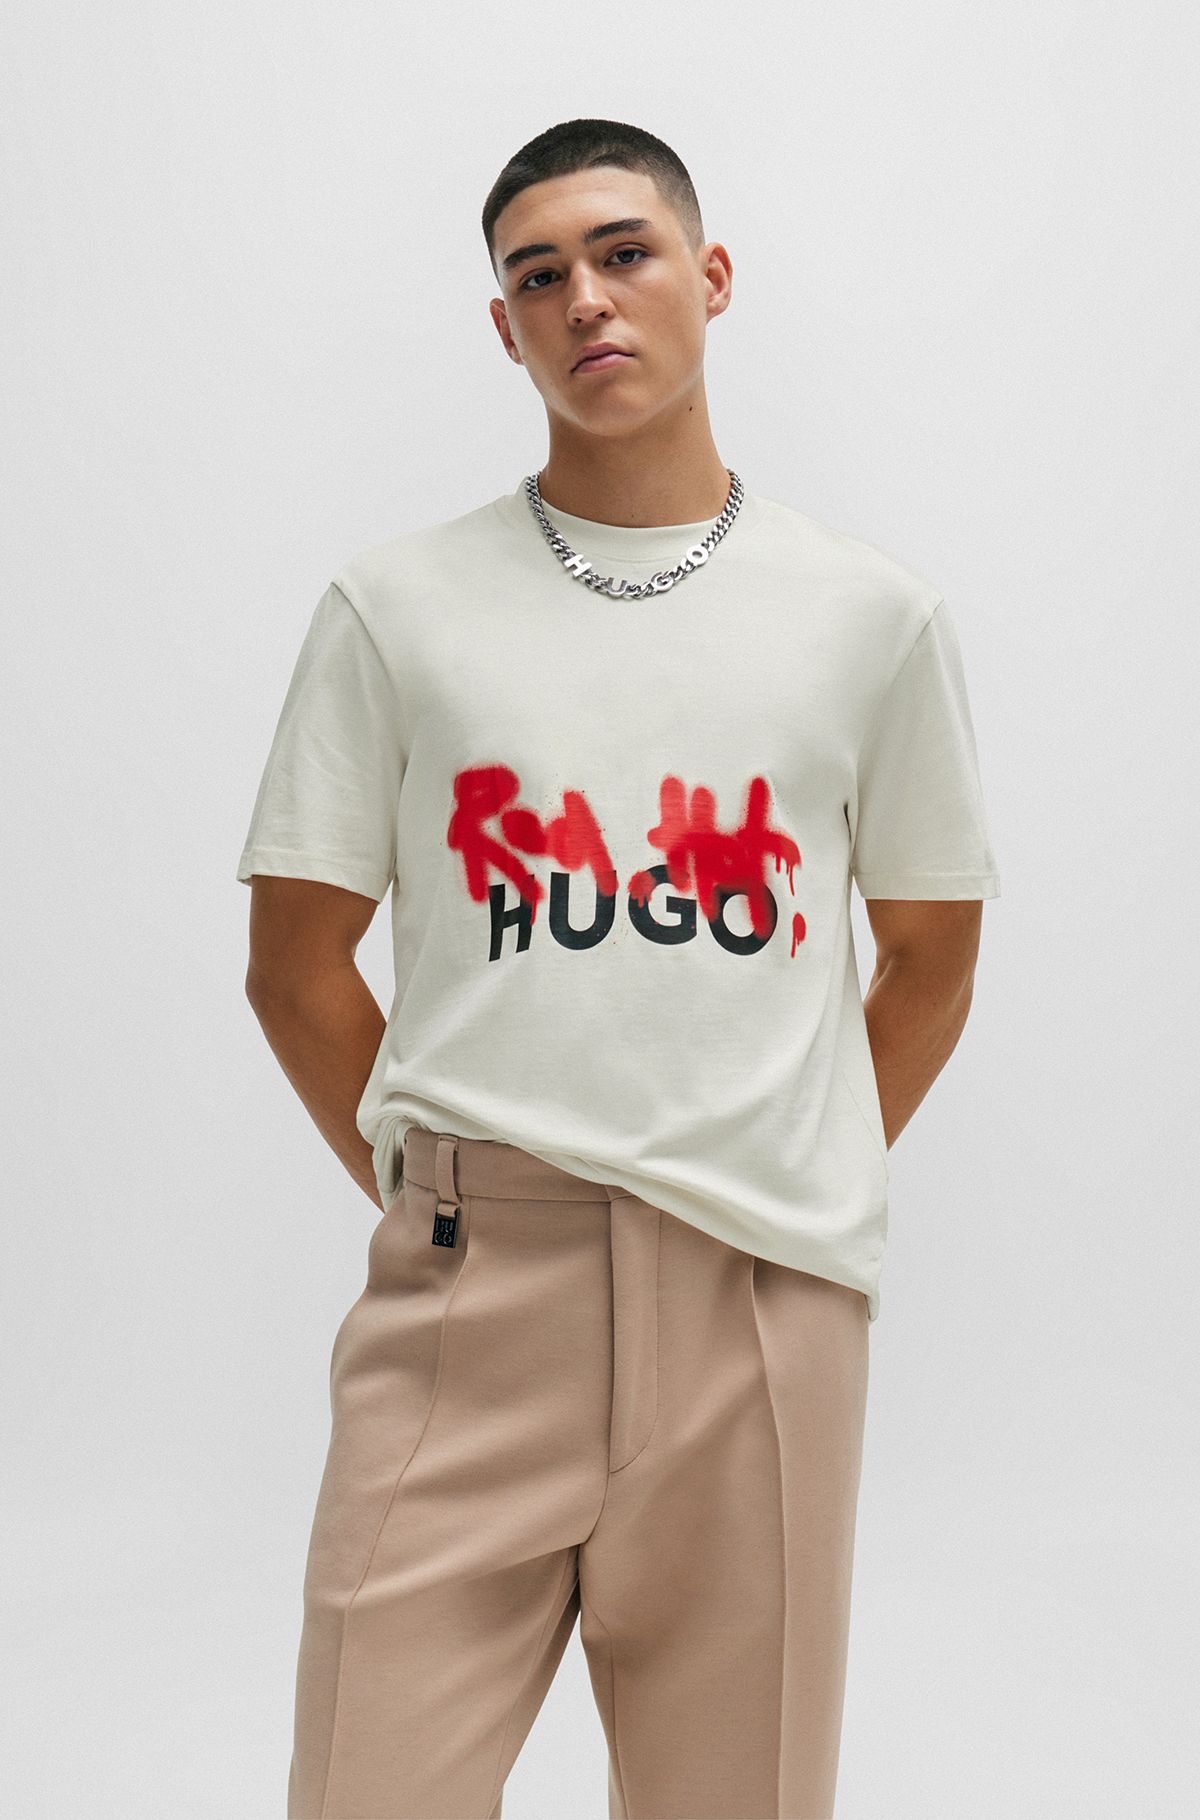 T-Shirts | Men | BOSS HUGO